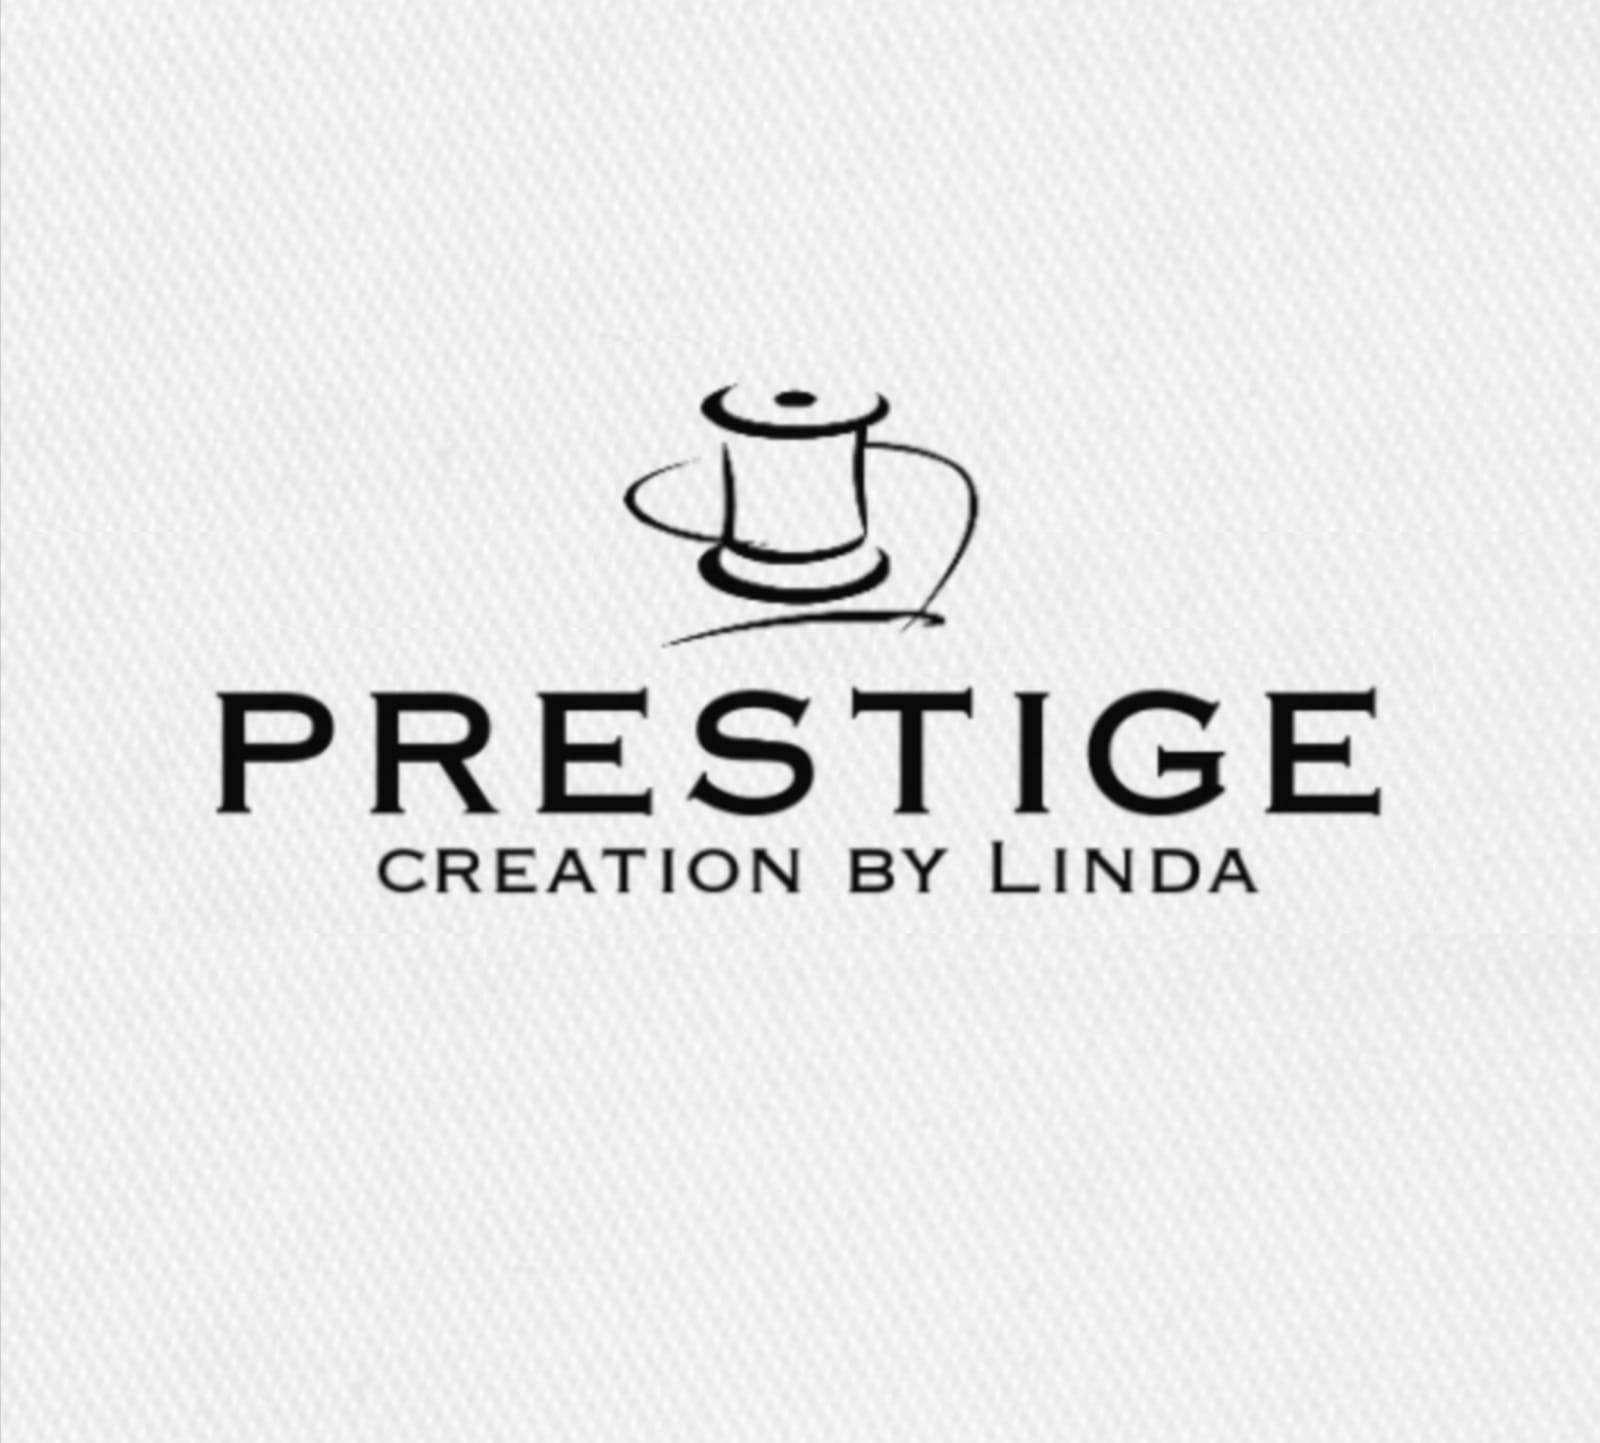 Prestige Creation by Linda